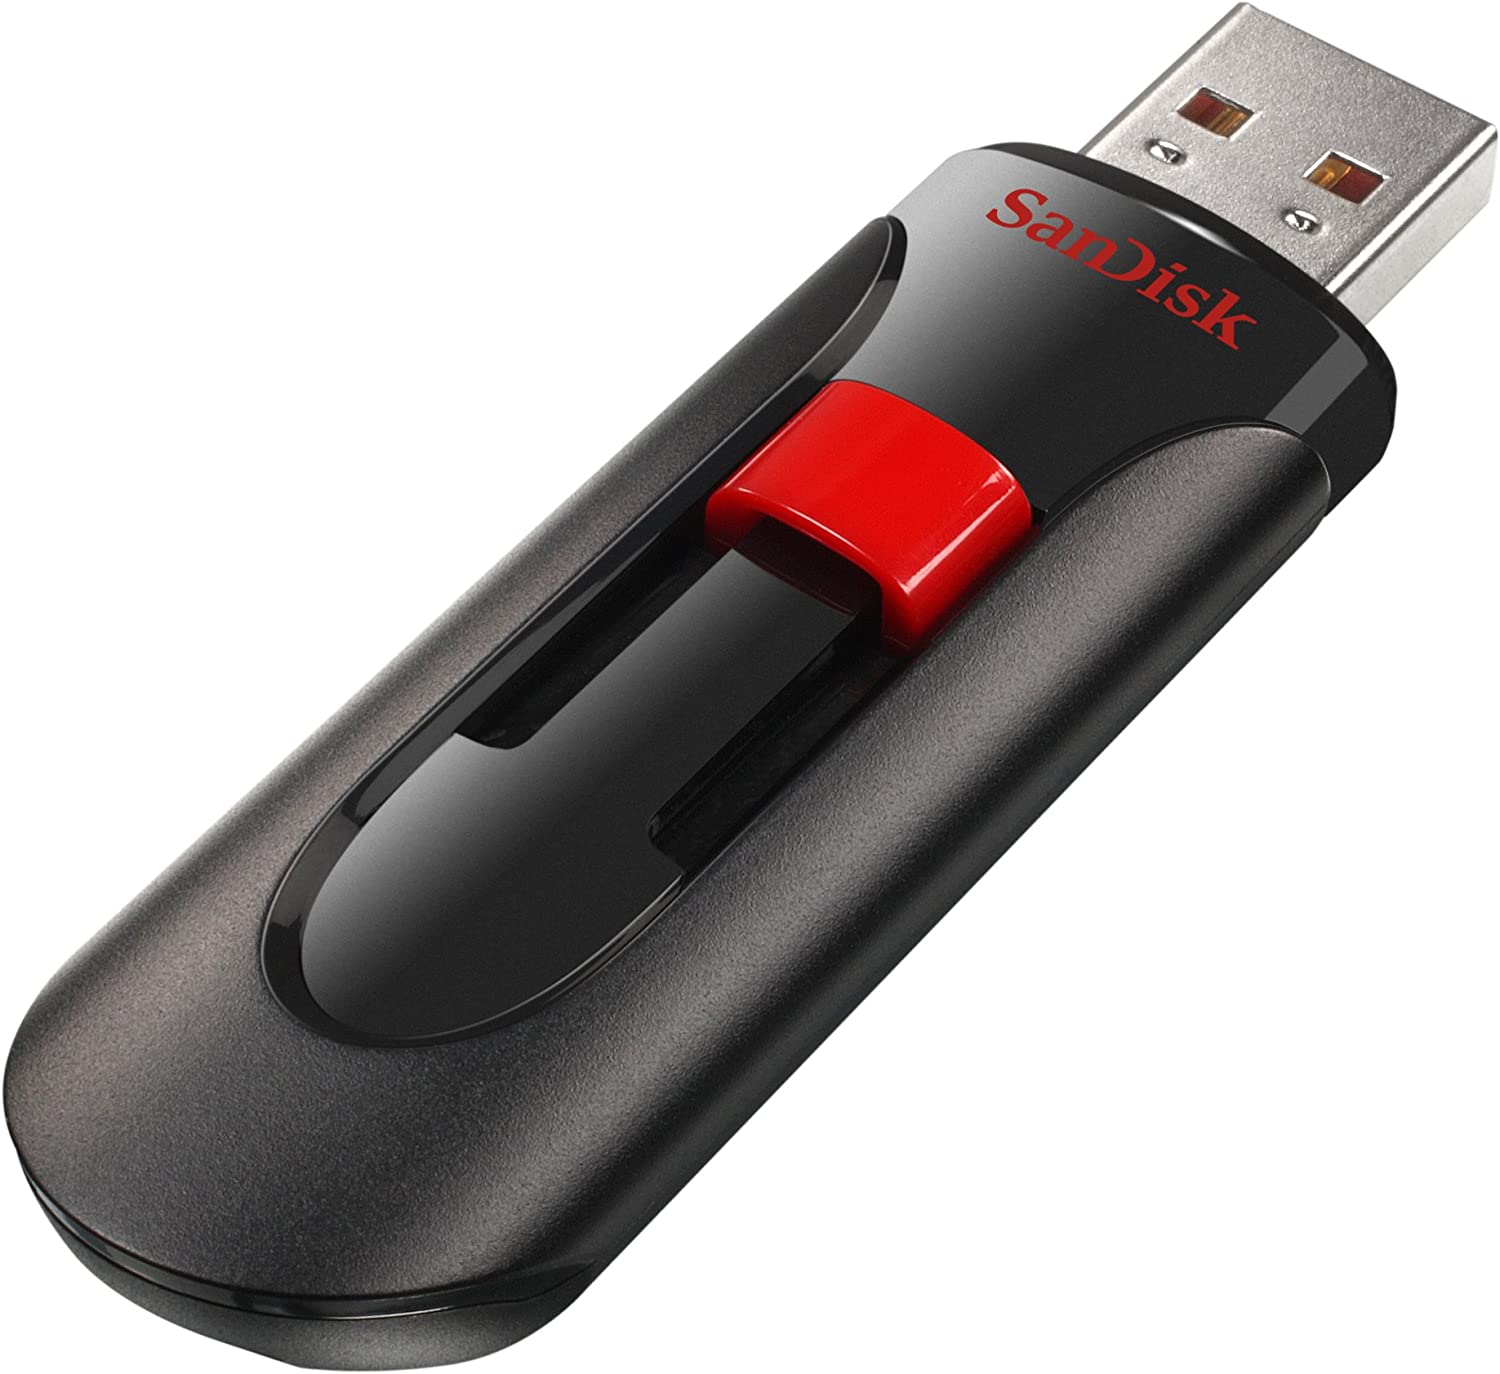  Sandisk Cruzer Glide USB Flash Drive SDCZ600 2.0 64gb 